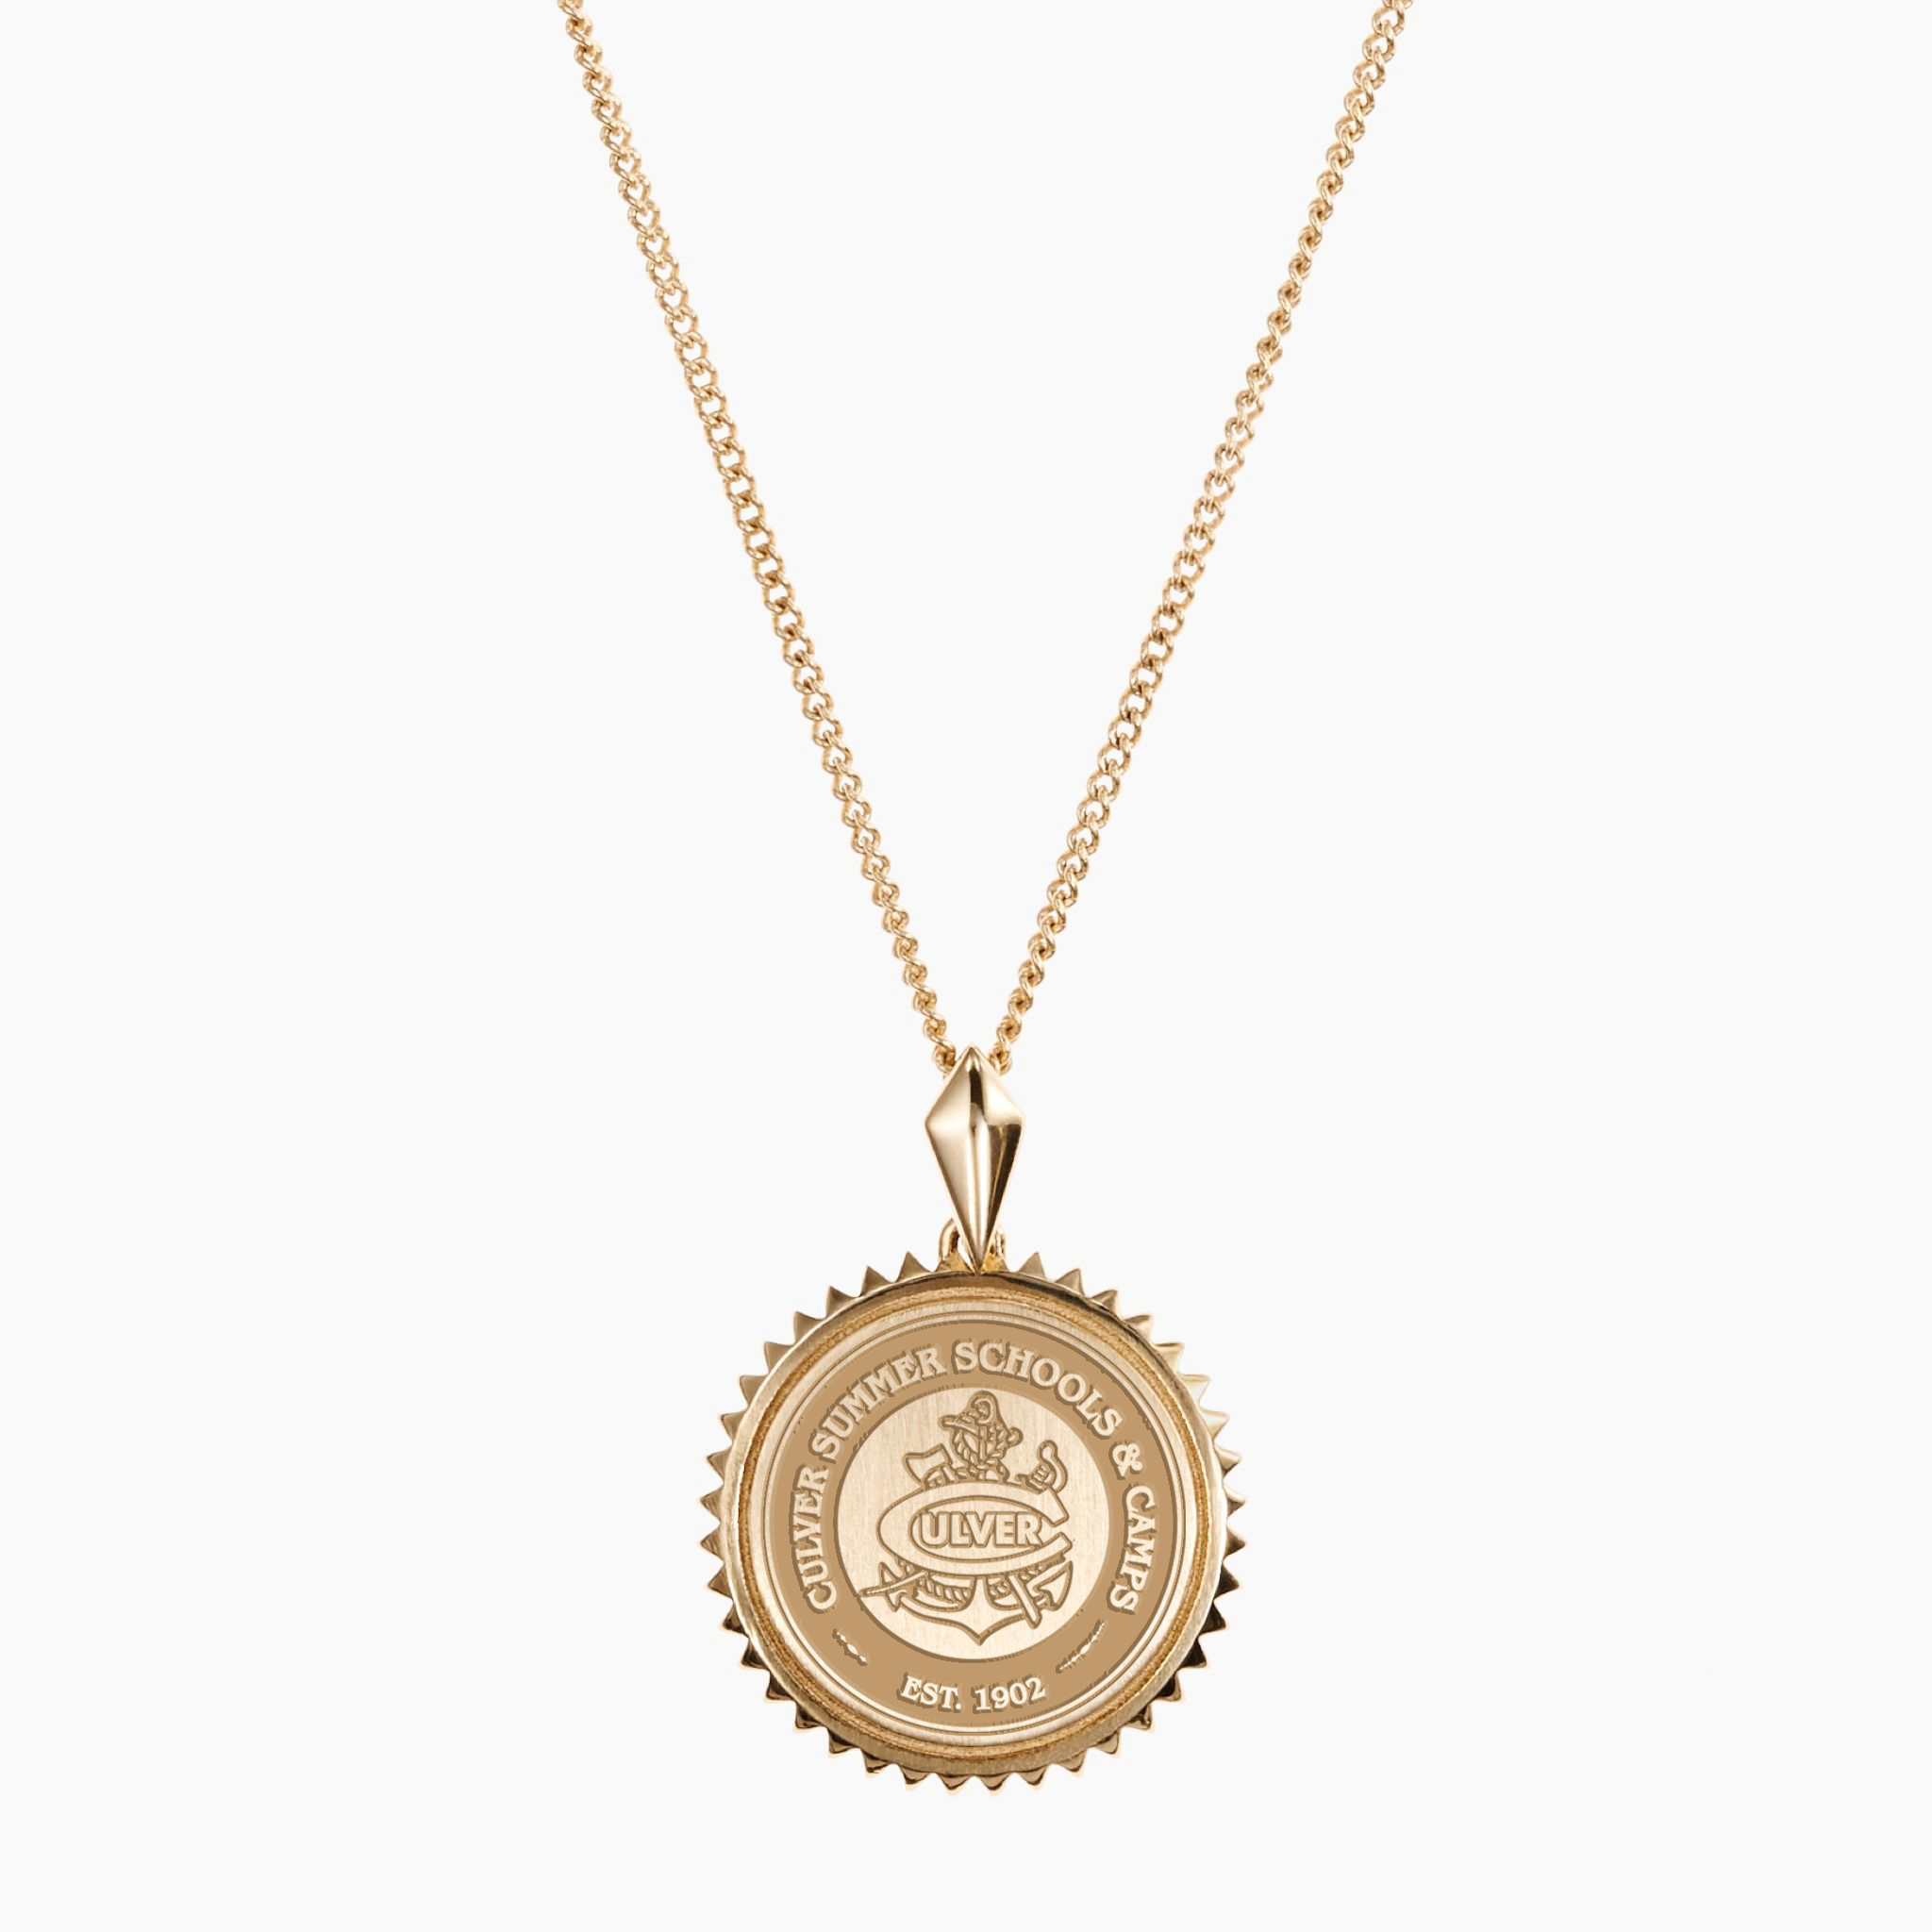 CSSC Seal Sunburst Necklace - Cavan Gold